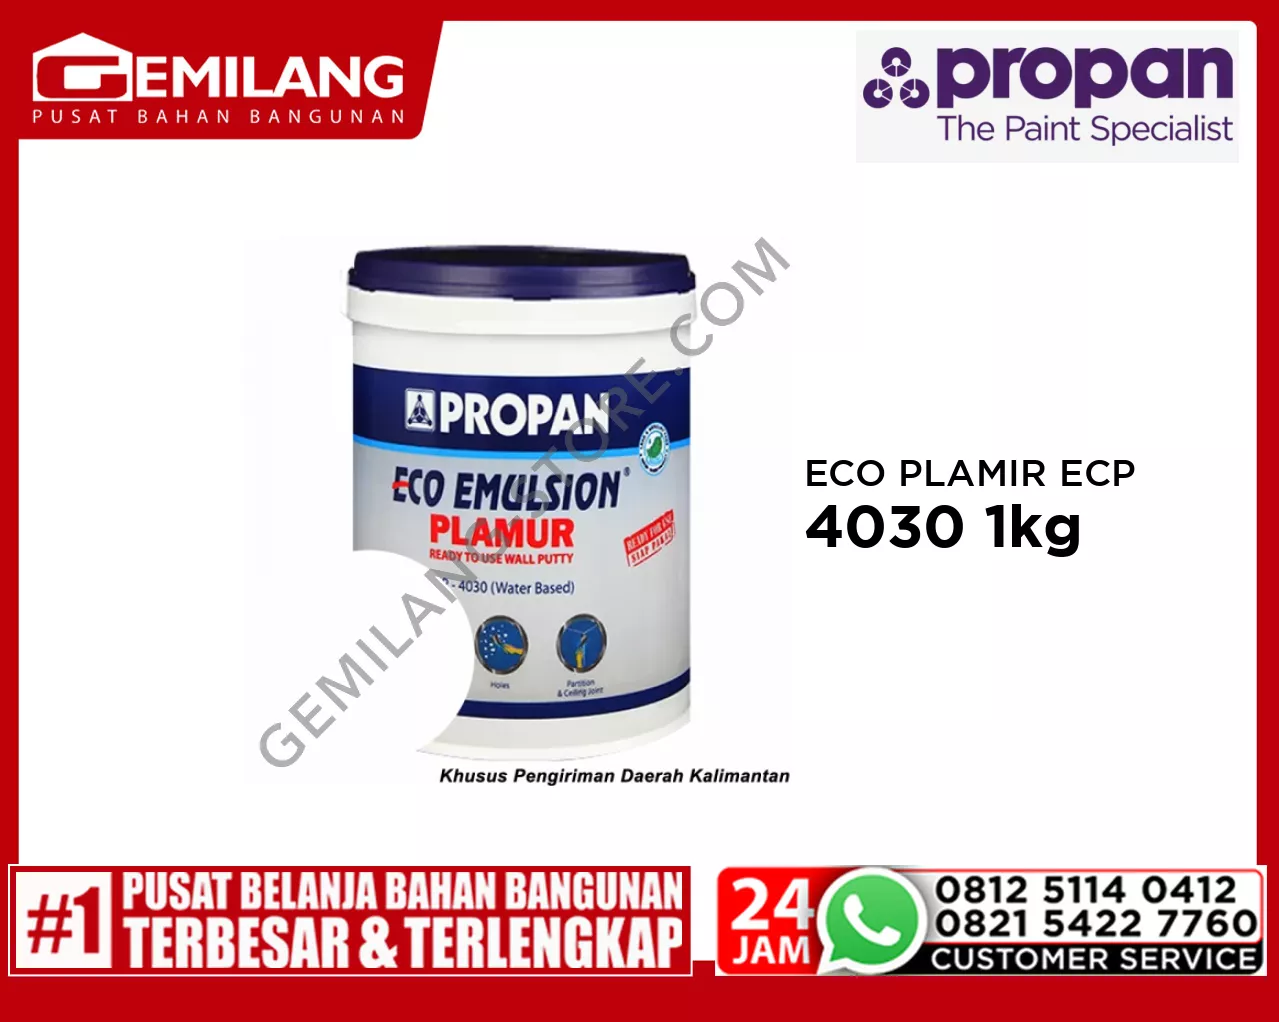 PROPAN ECO PLAMIR ECP 4030 1kg